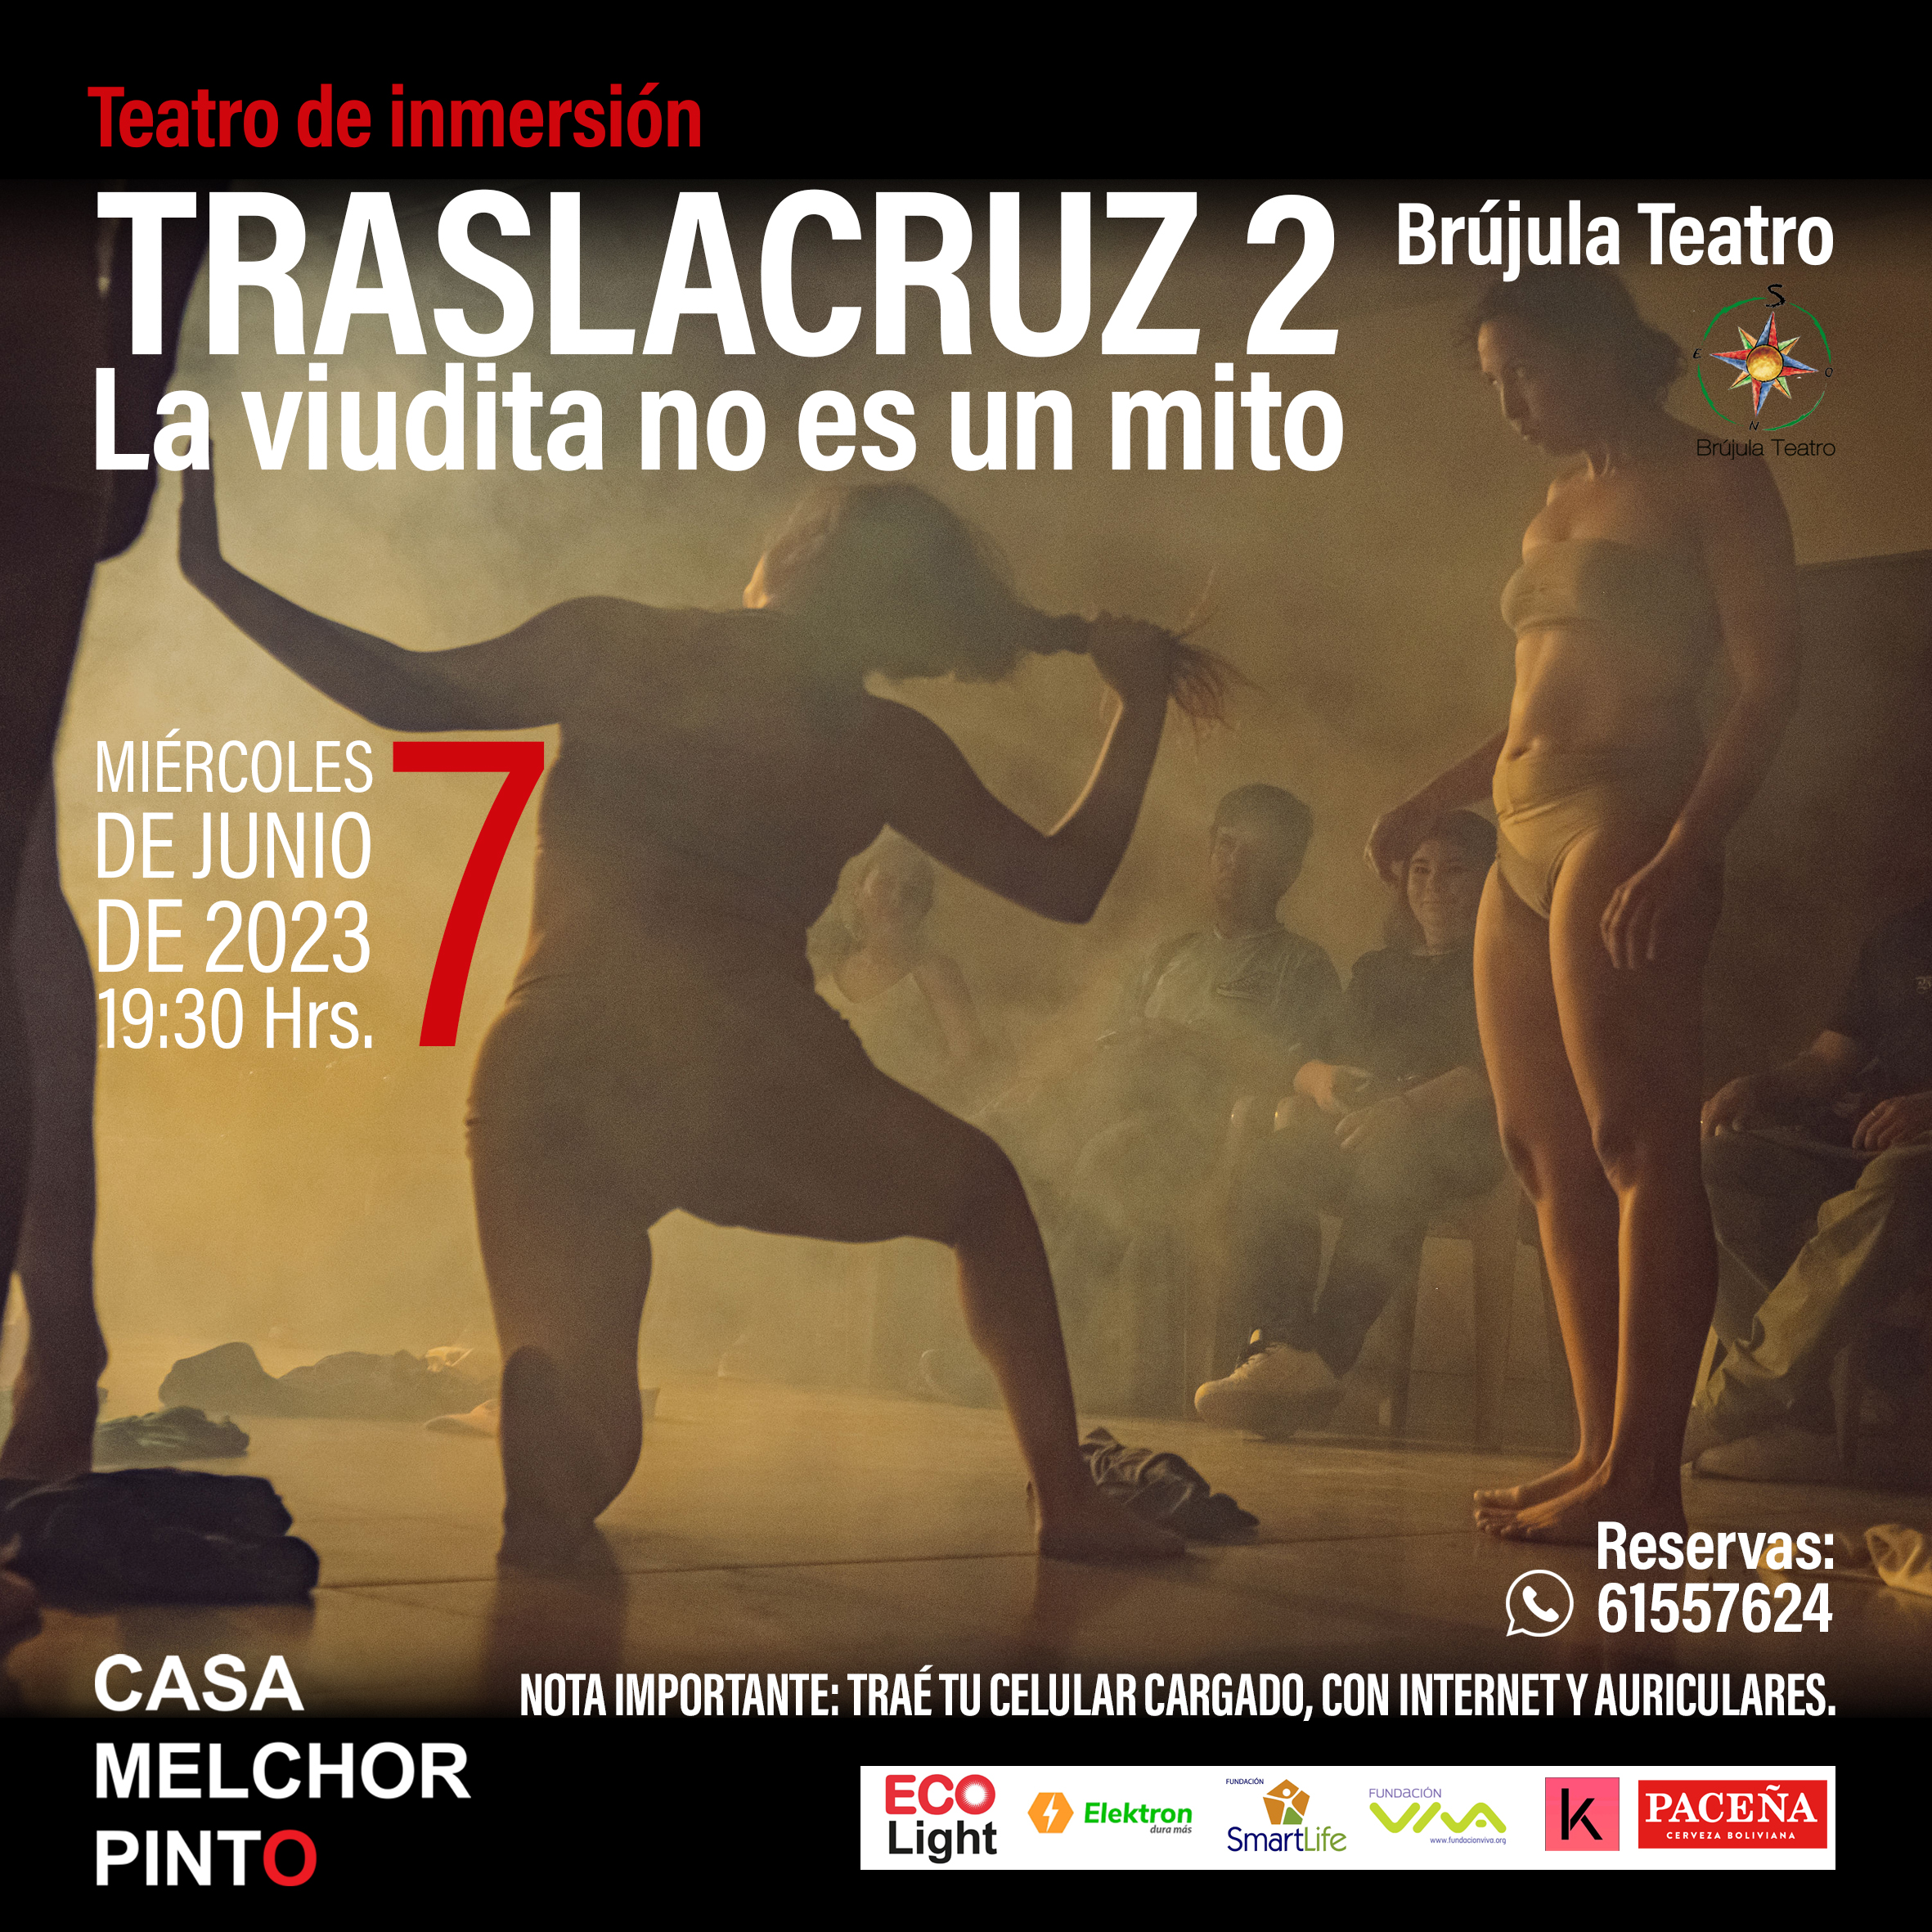 Traslacruz brújula teatro 7 jun 2023